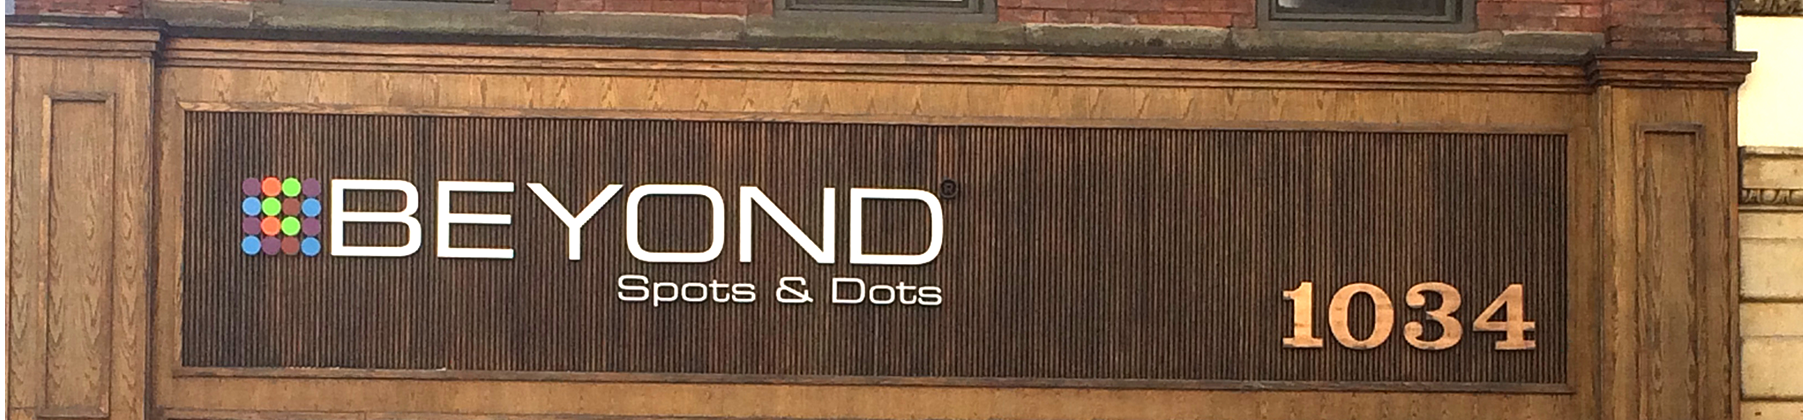 Beyond Spots & Dots Branded Signage